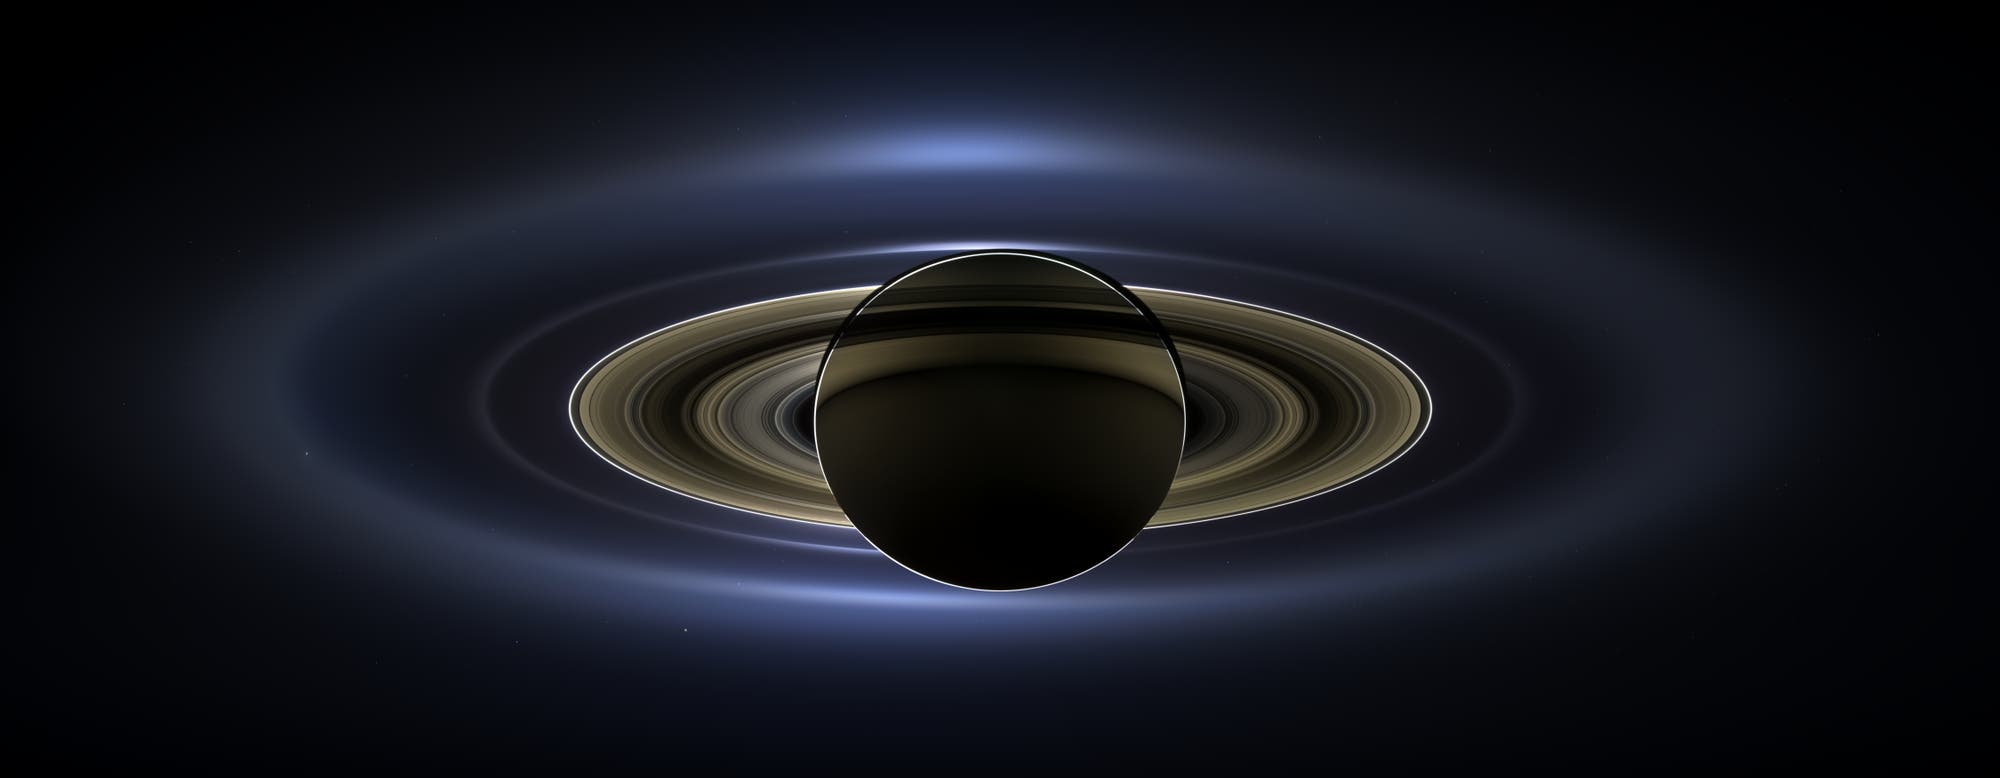 Saturn - der Herr der Ringe